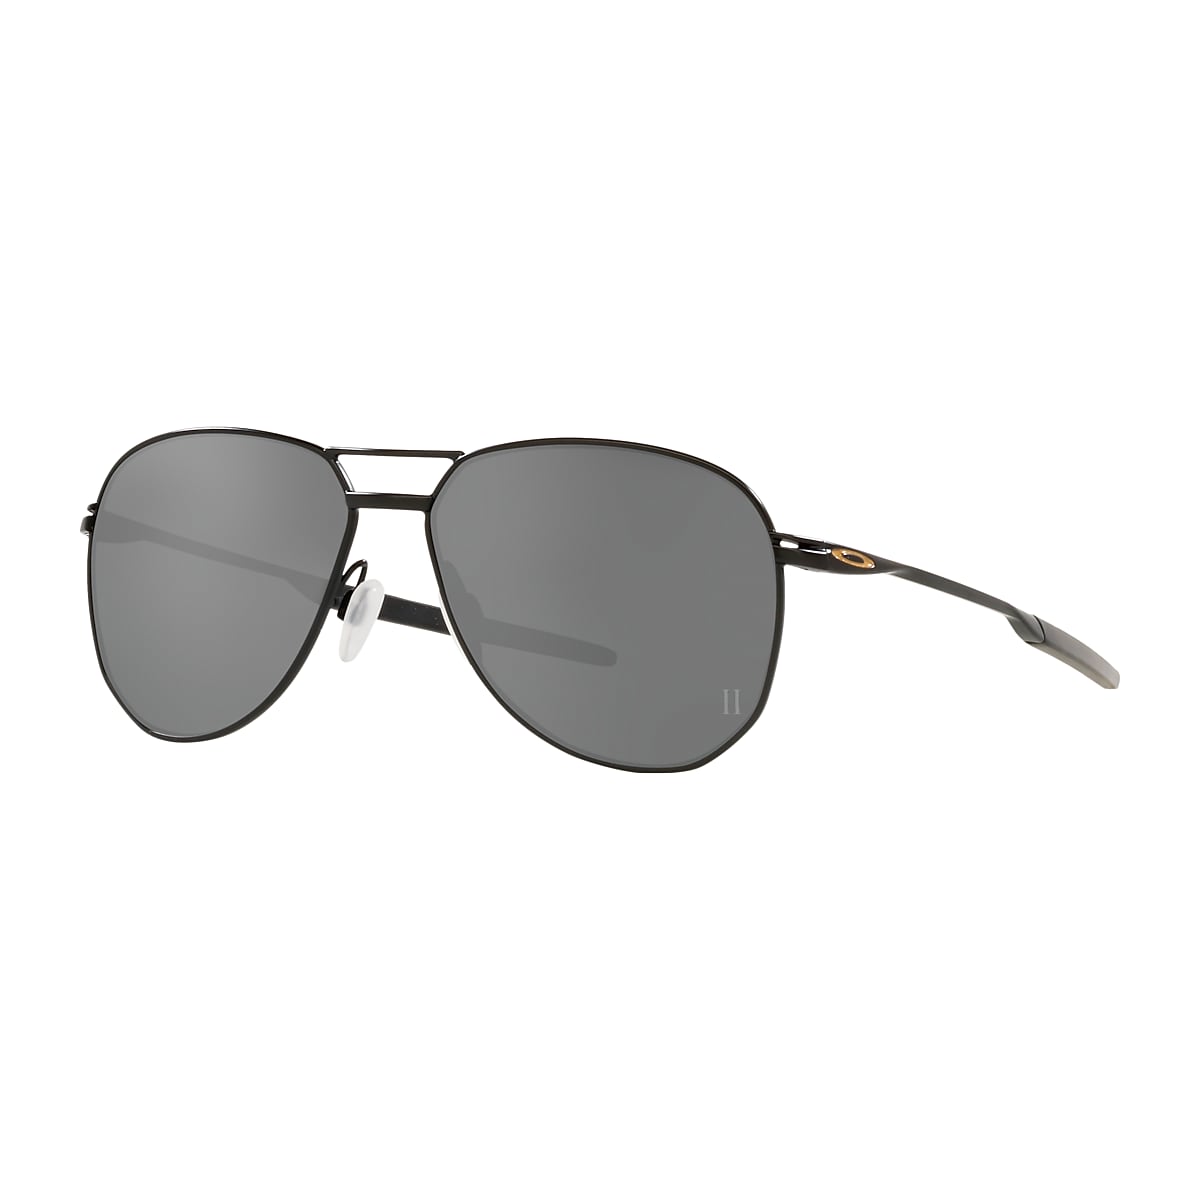 Oakley launches Patrick Mahomes signature series sunglasses